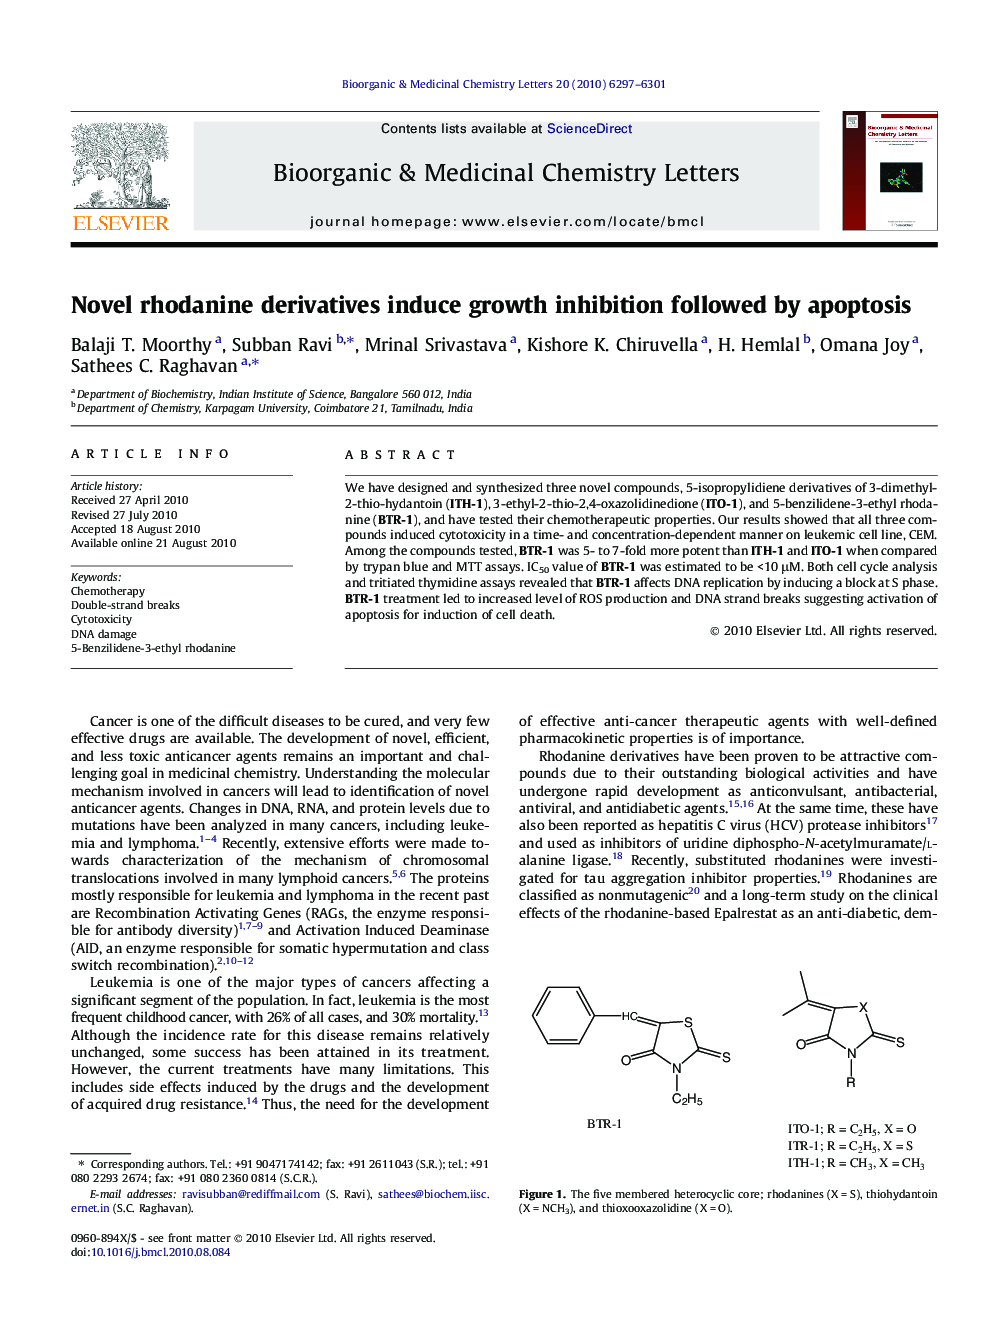 Novel rhodanine derivatives induce growth inhibition followed by apoptosis